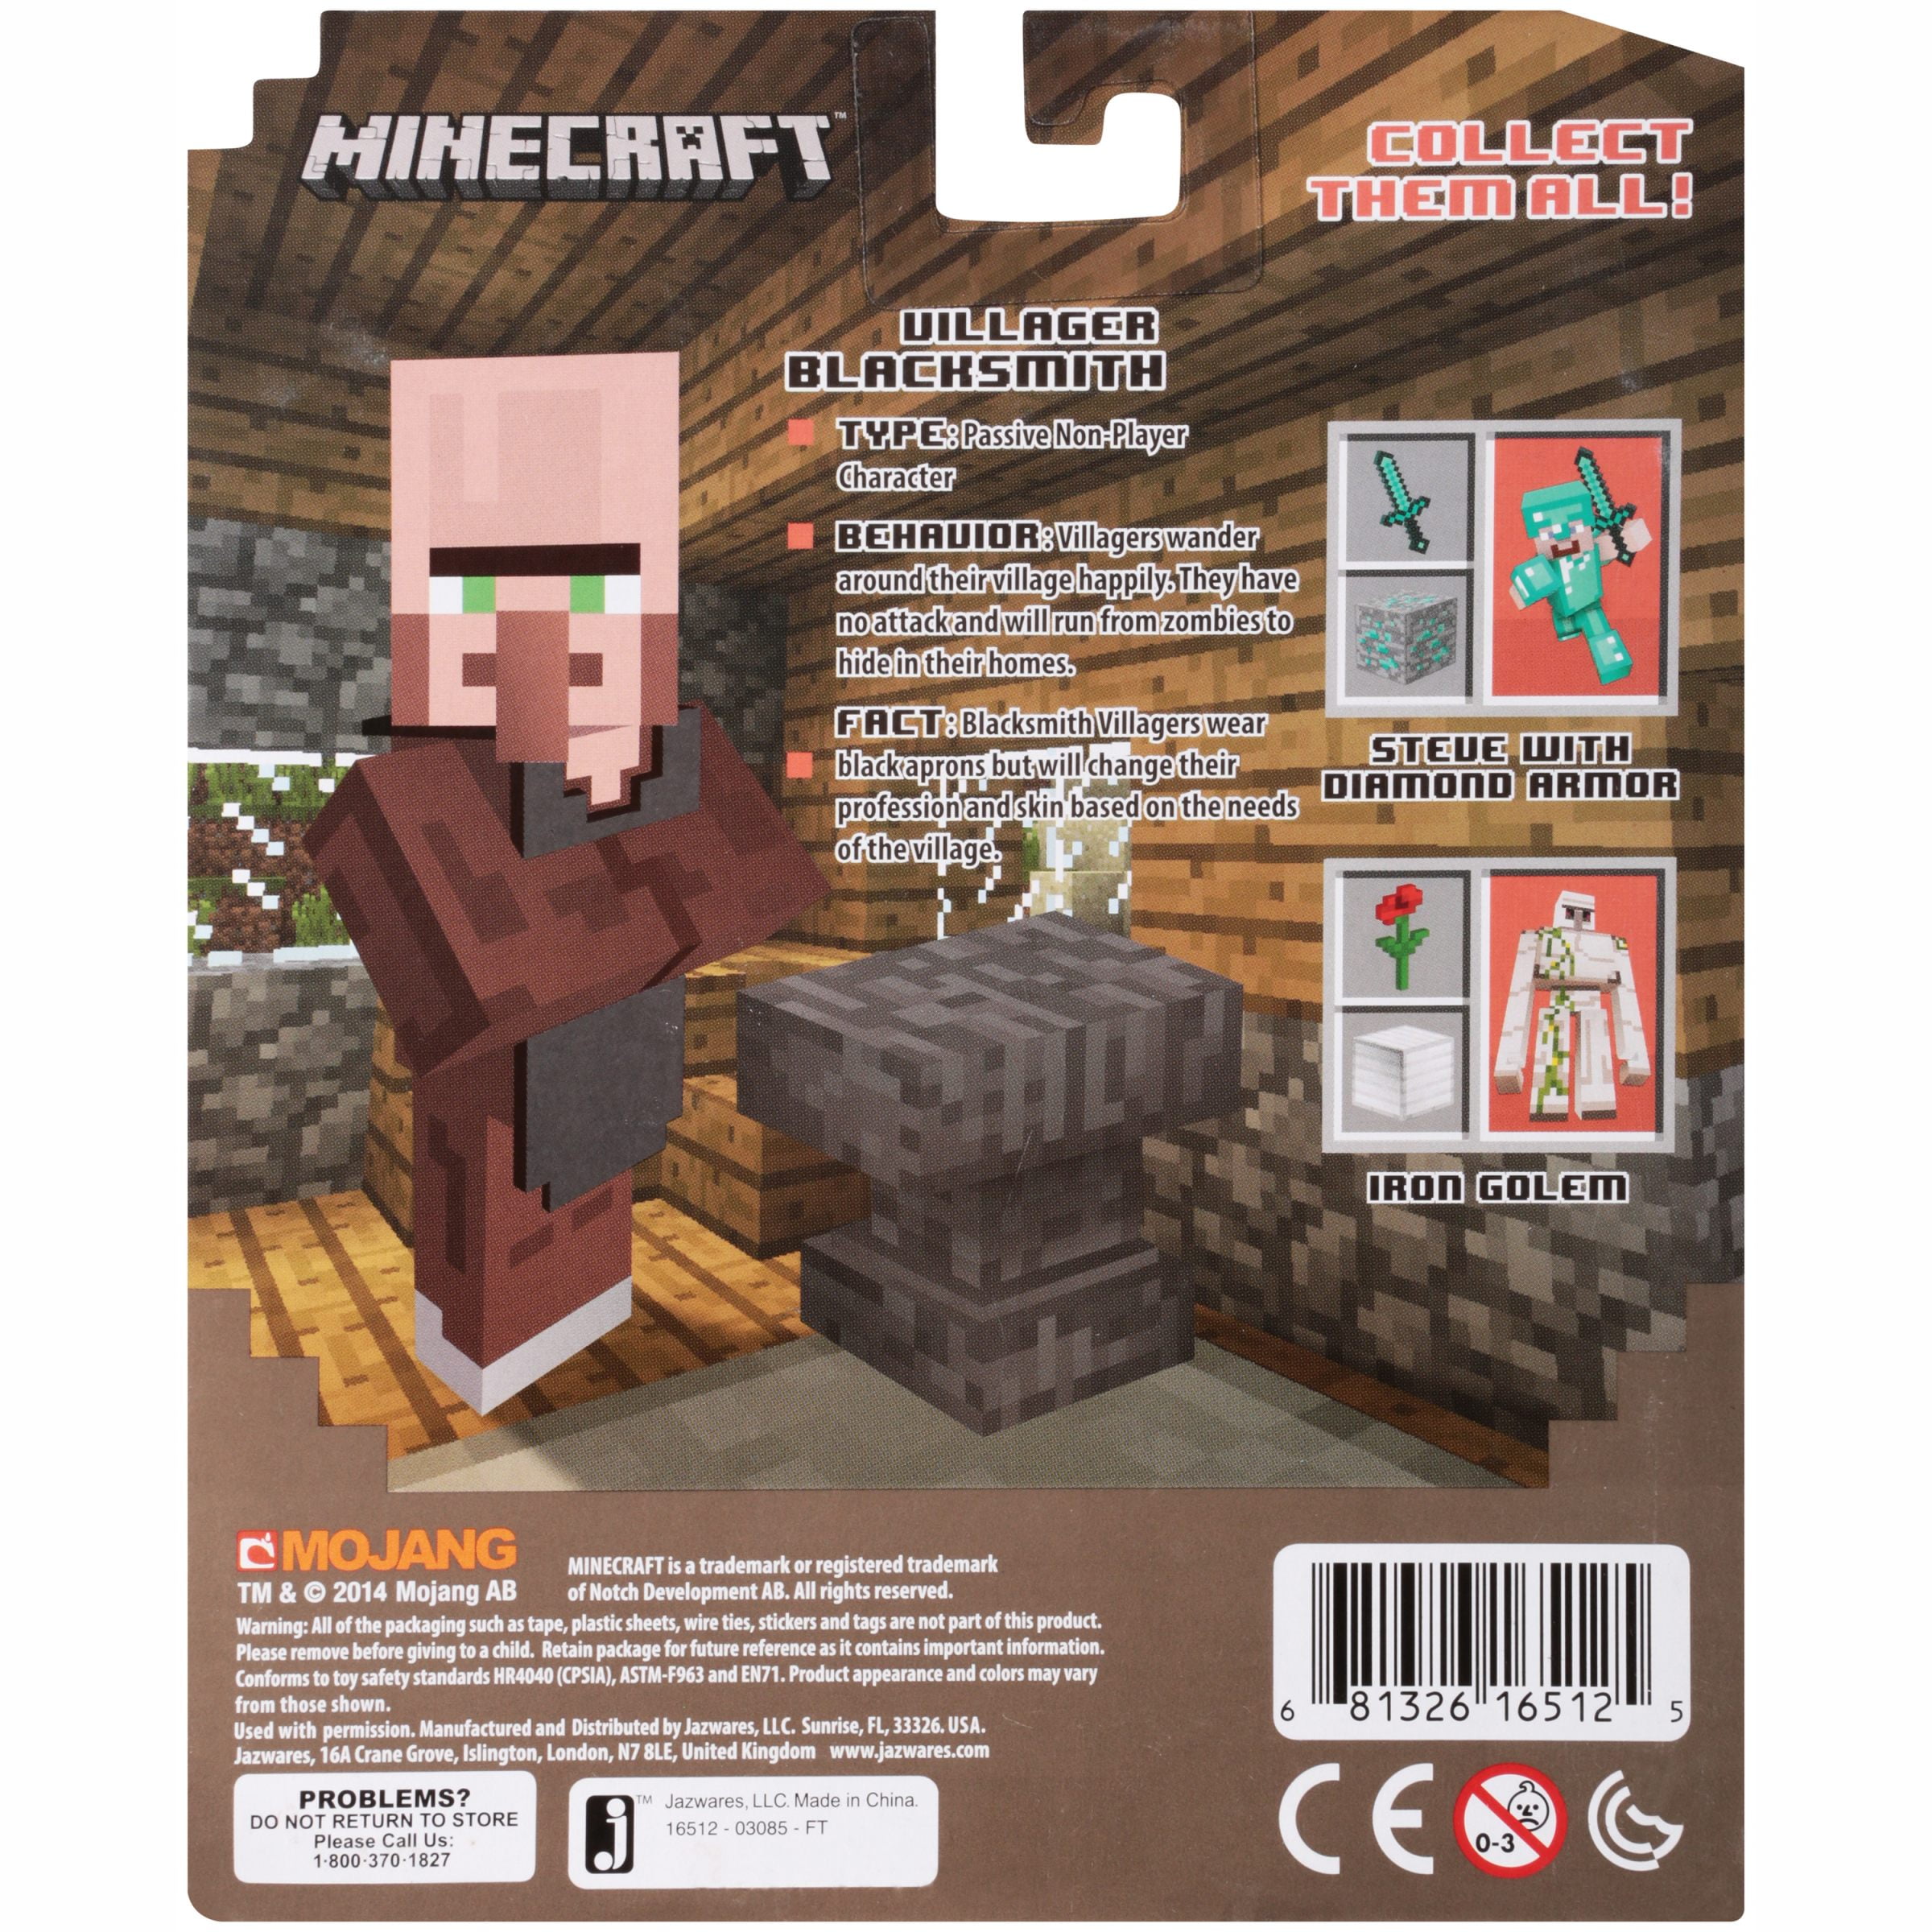 Minecraft Series 2 Overworld Villager Blacksmith 2 Pc Carded Pack Walmart Com Walmart Com - villager news song roblox id